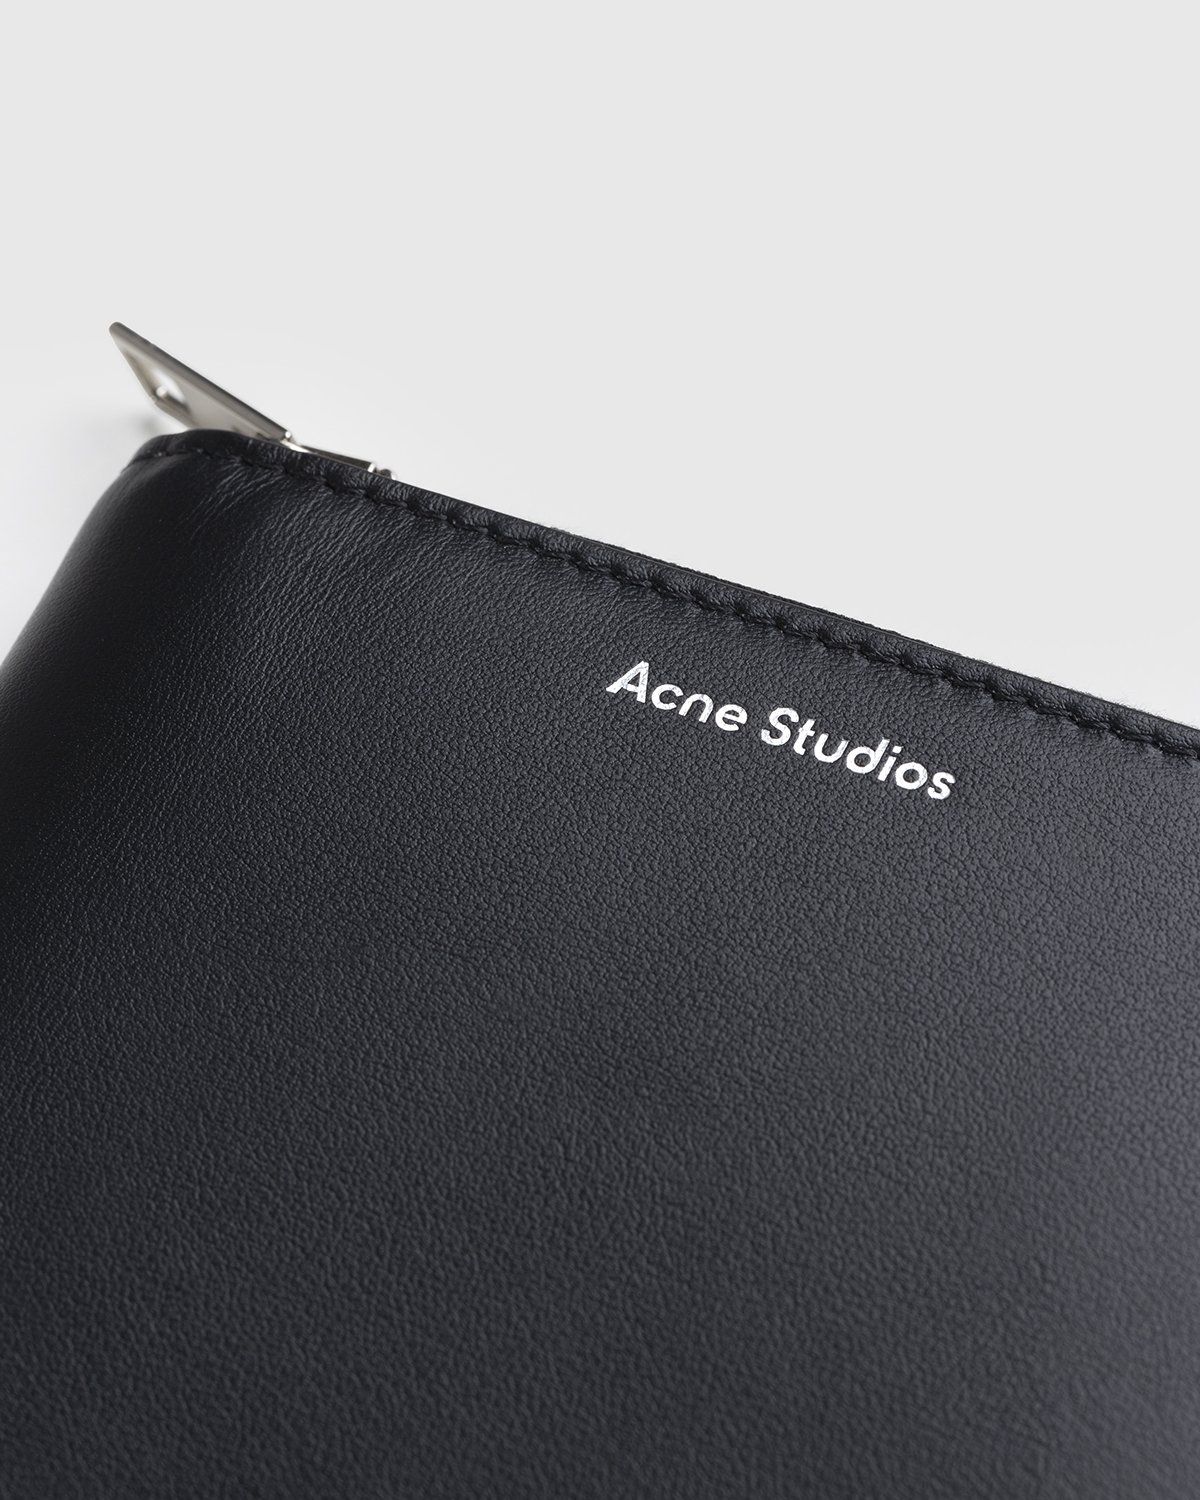 Acne Studios – Zippered Wallet Black - Wallets - Black - Image 4